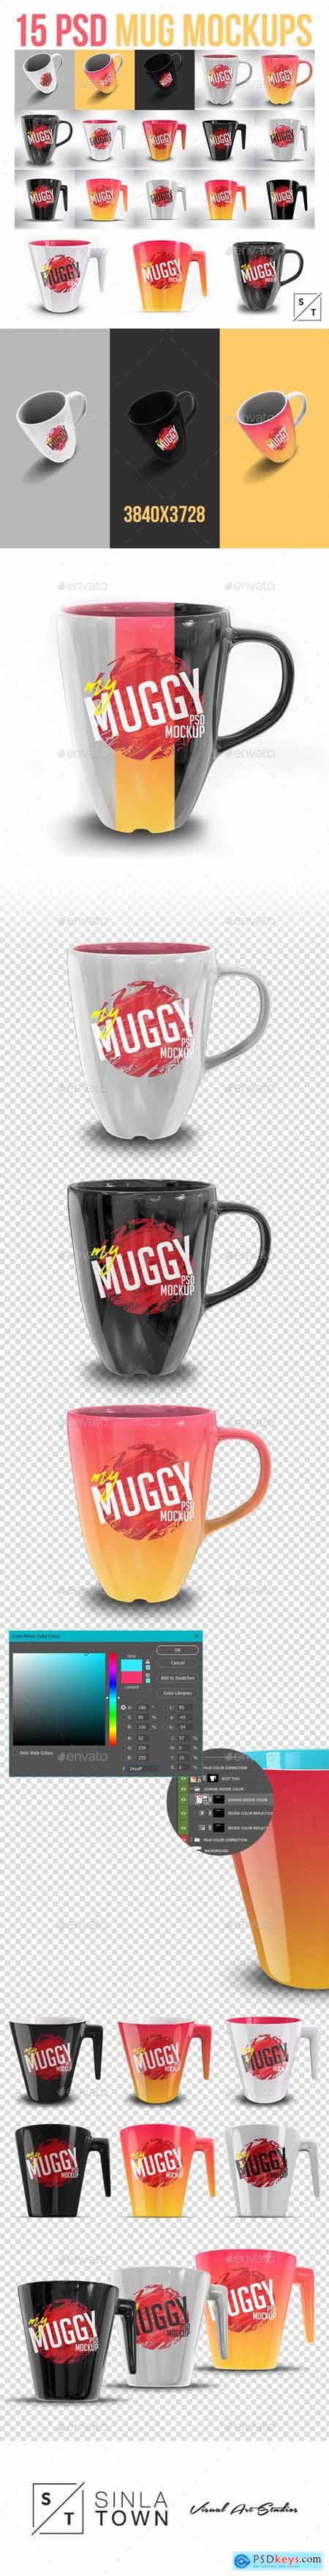 Photorealistic 15 PSD Mockup Mug Set 22658898